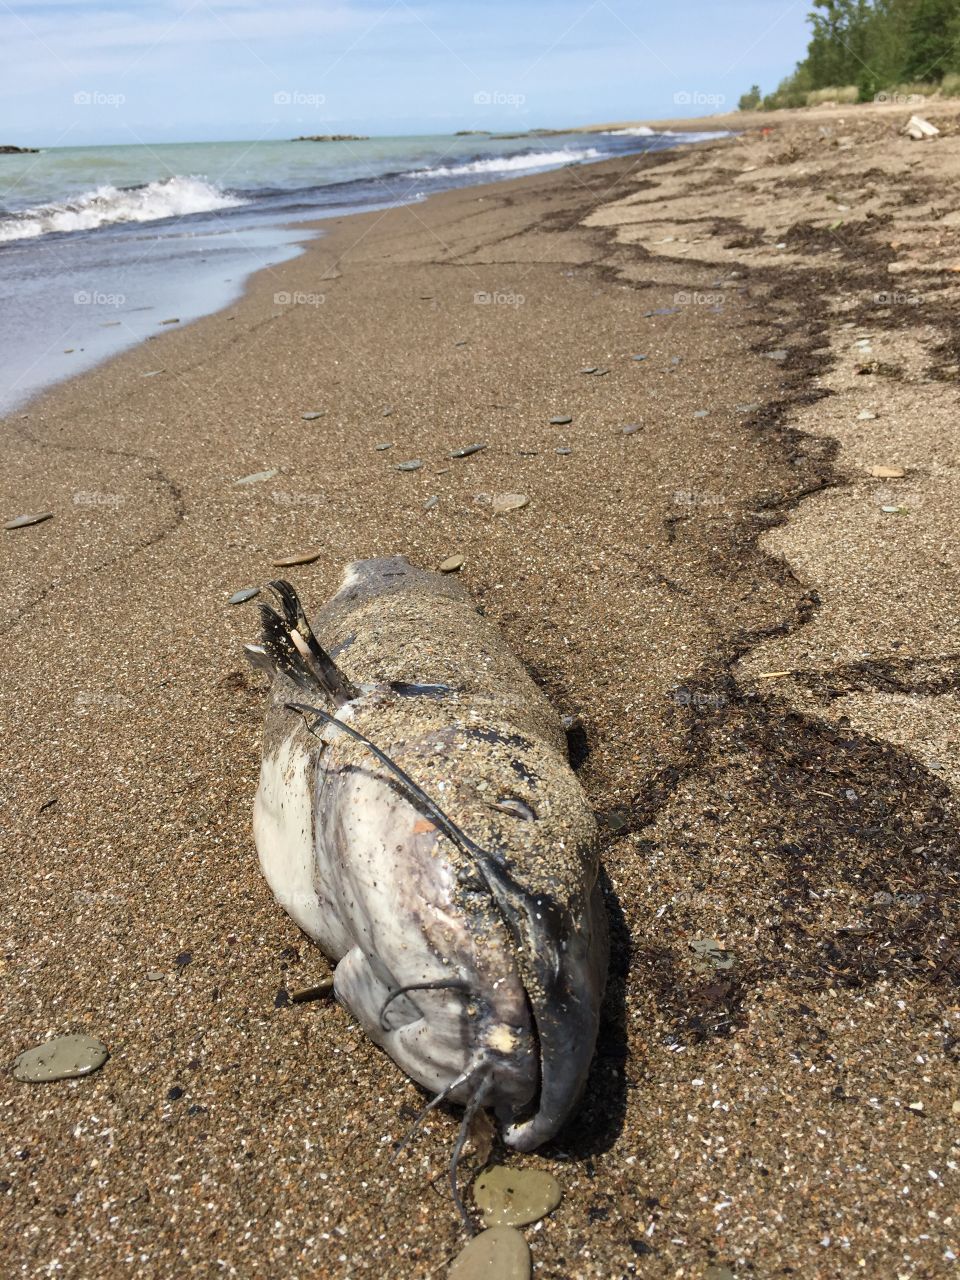 Big dead fish on the beach